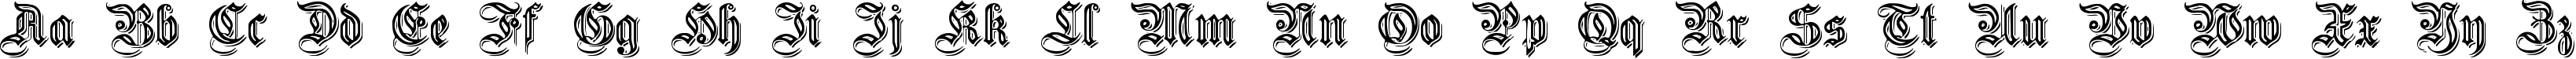 Пример написания английского алфавита шрифтом EmbossedGermanica